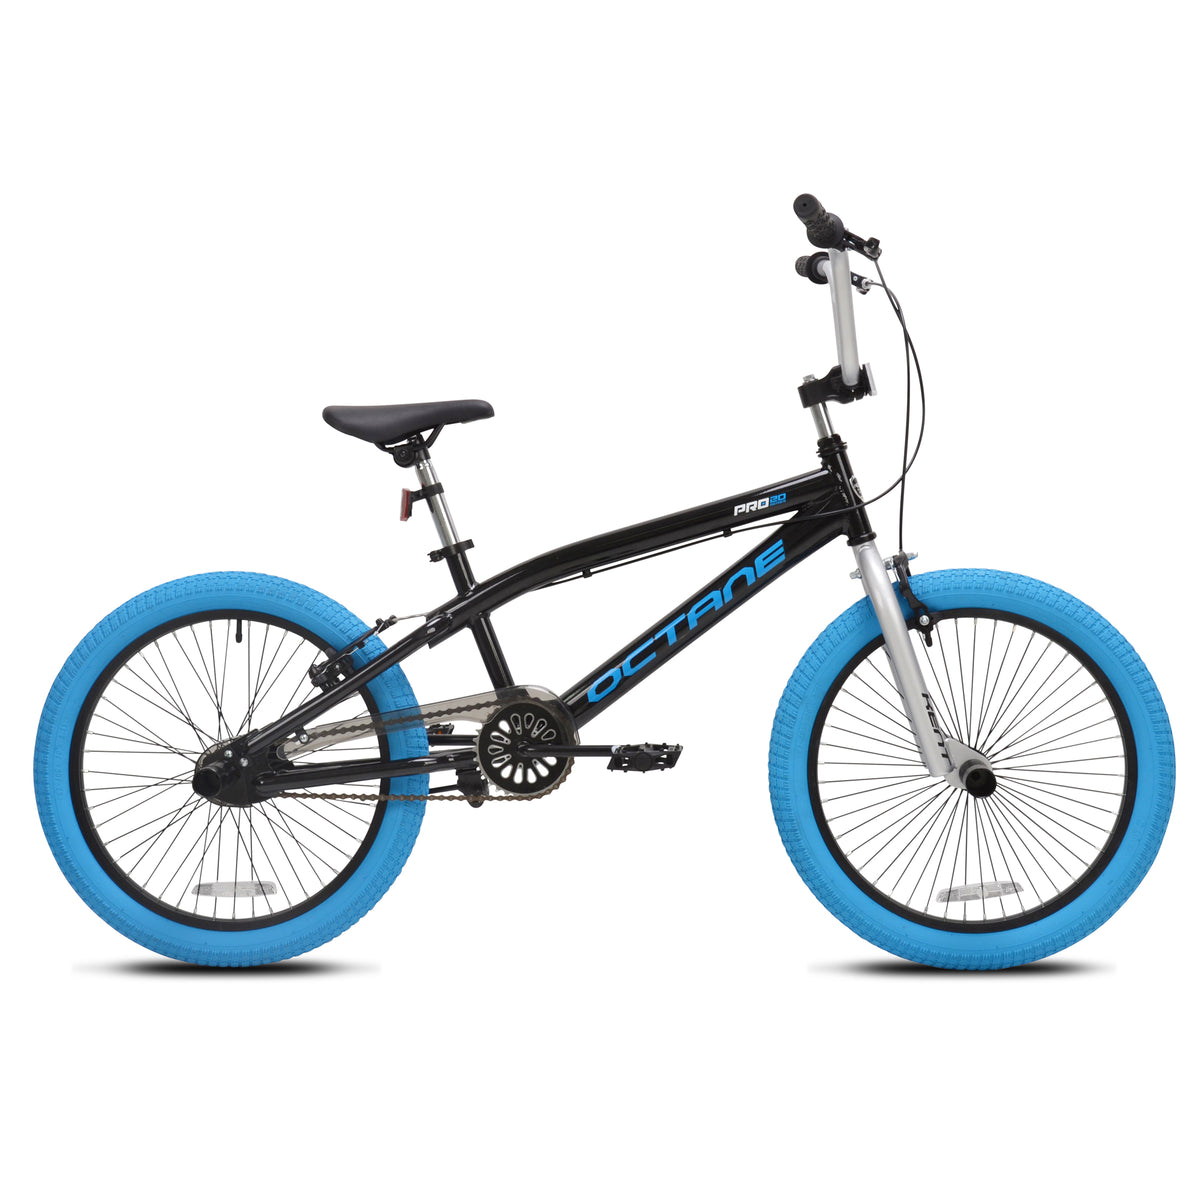 20" Kent Octane | BMX Bike for Kids Ages 7-13